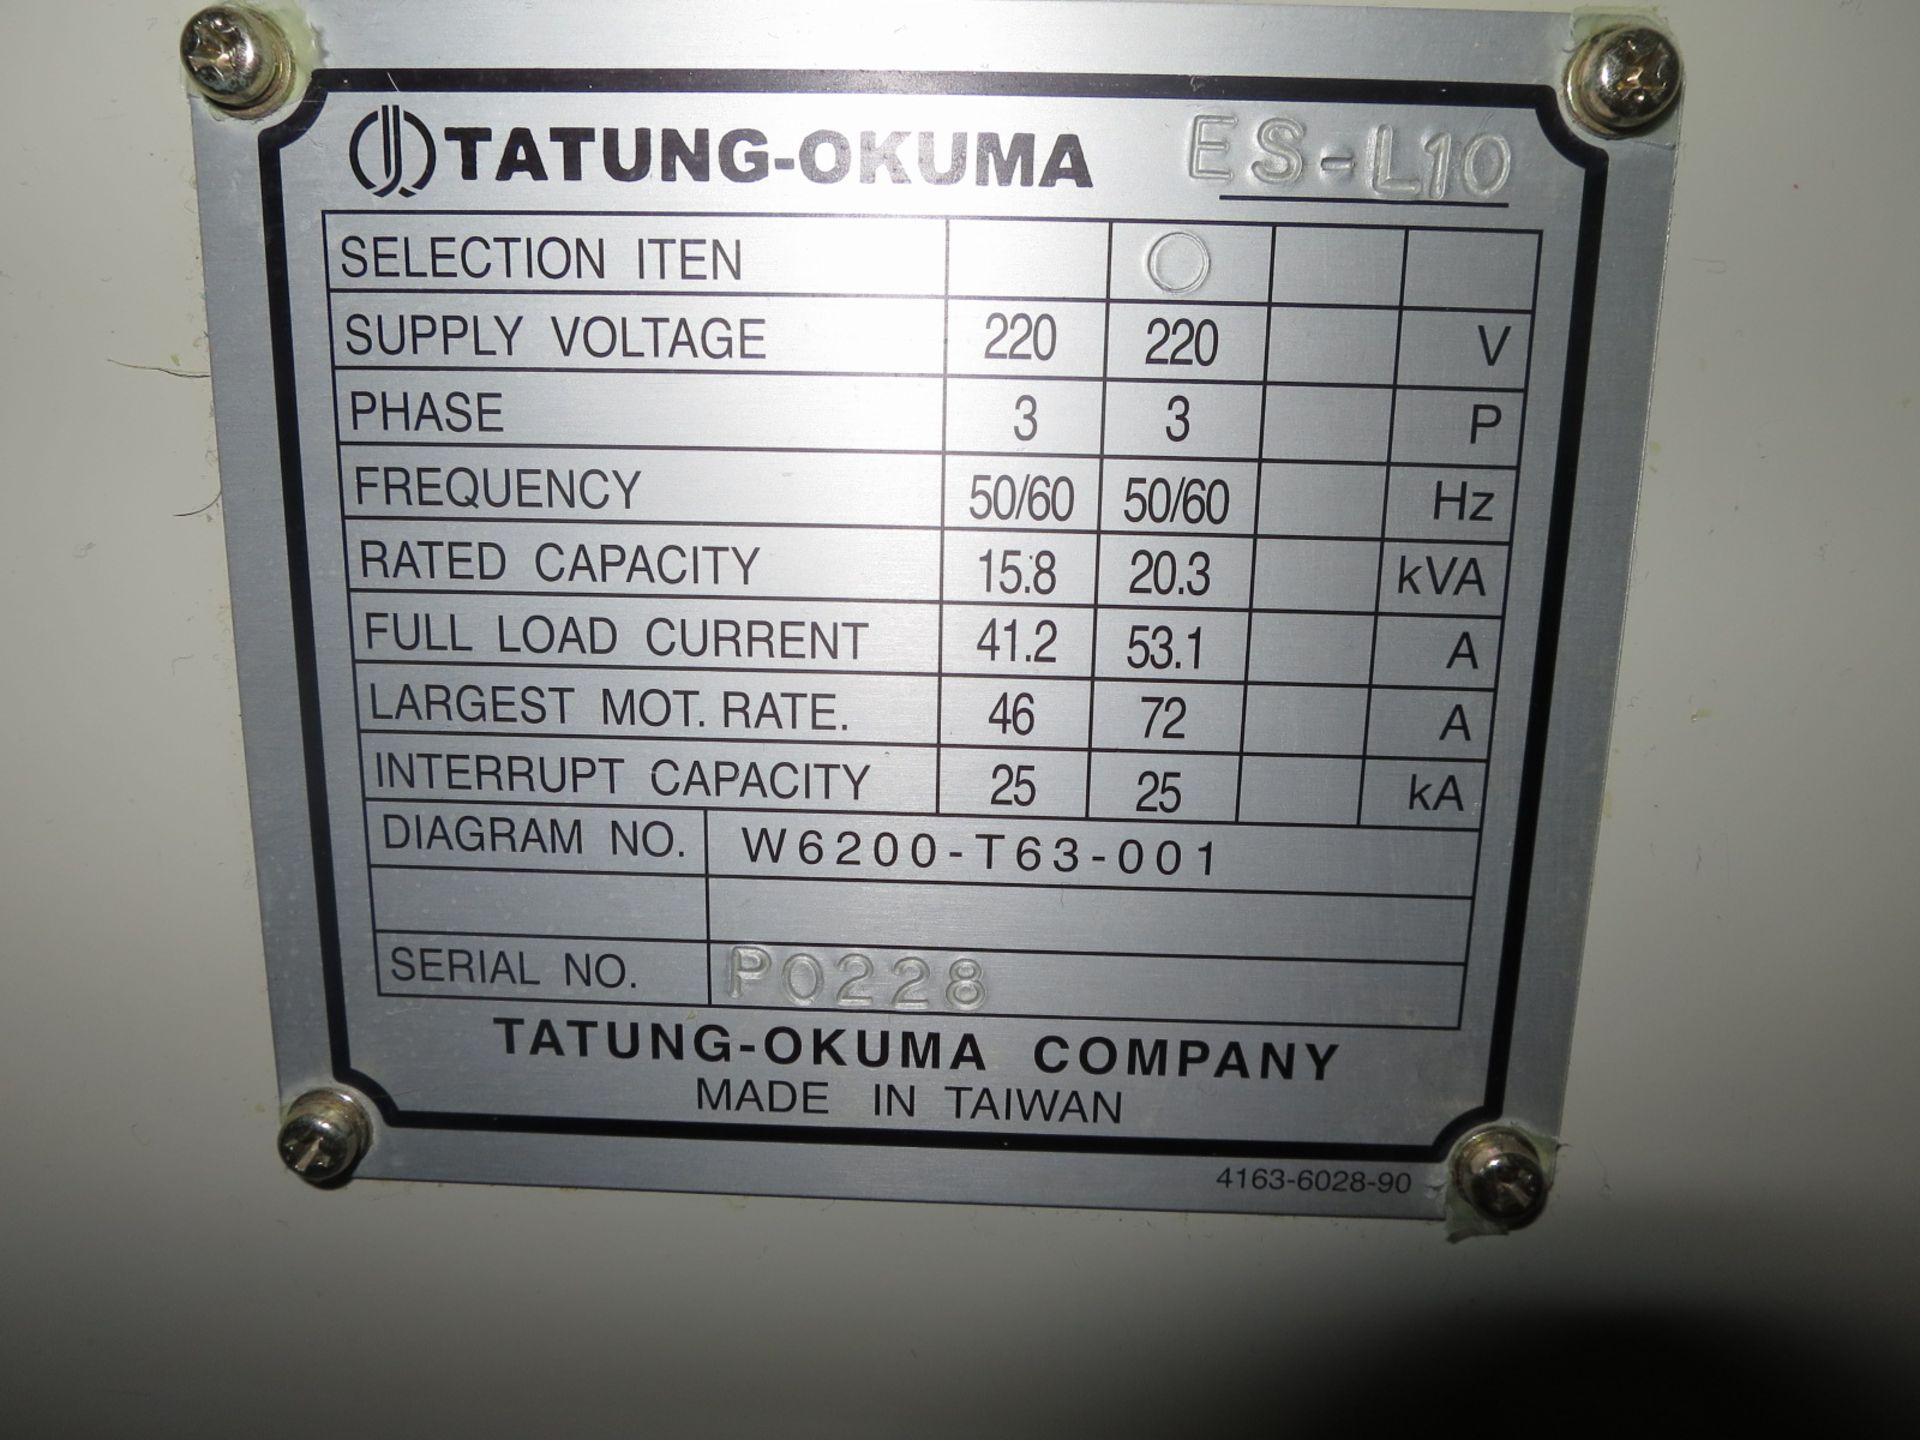 Okuma ES-L10 CNC 2-Axis Turning Center Lathe, S/N PO228, New 2005 - Image 6 of 8